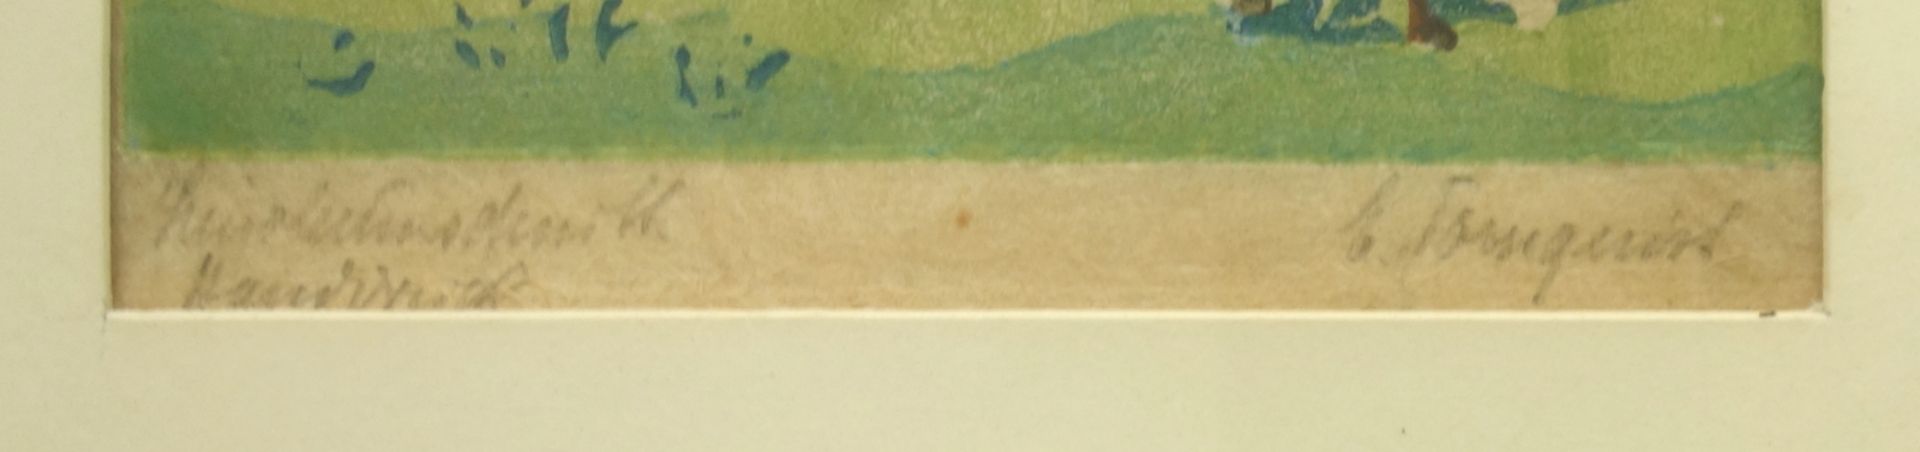 Ellen Tornquist (1871-?) "Ziegen in Alpenlandschaft", Farblinolschnitt, um 1920, unten rechts - Bild 2 aus 2